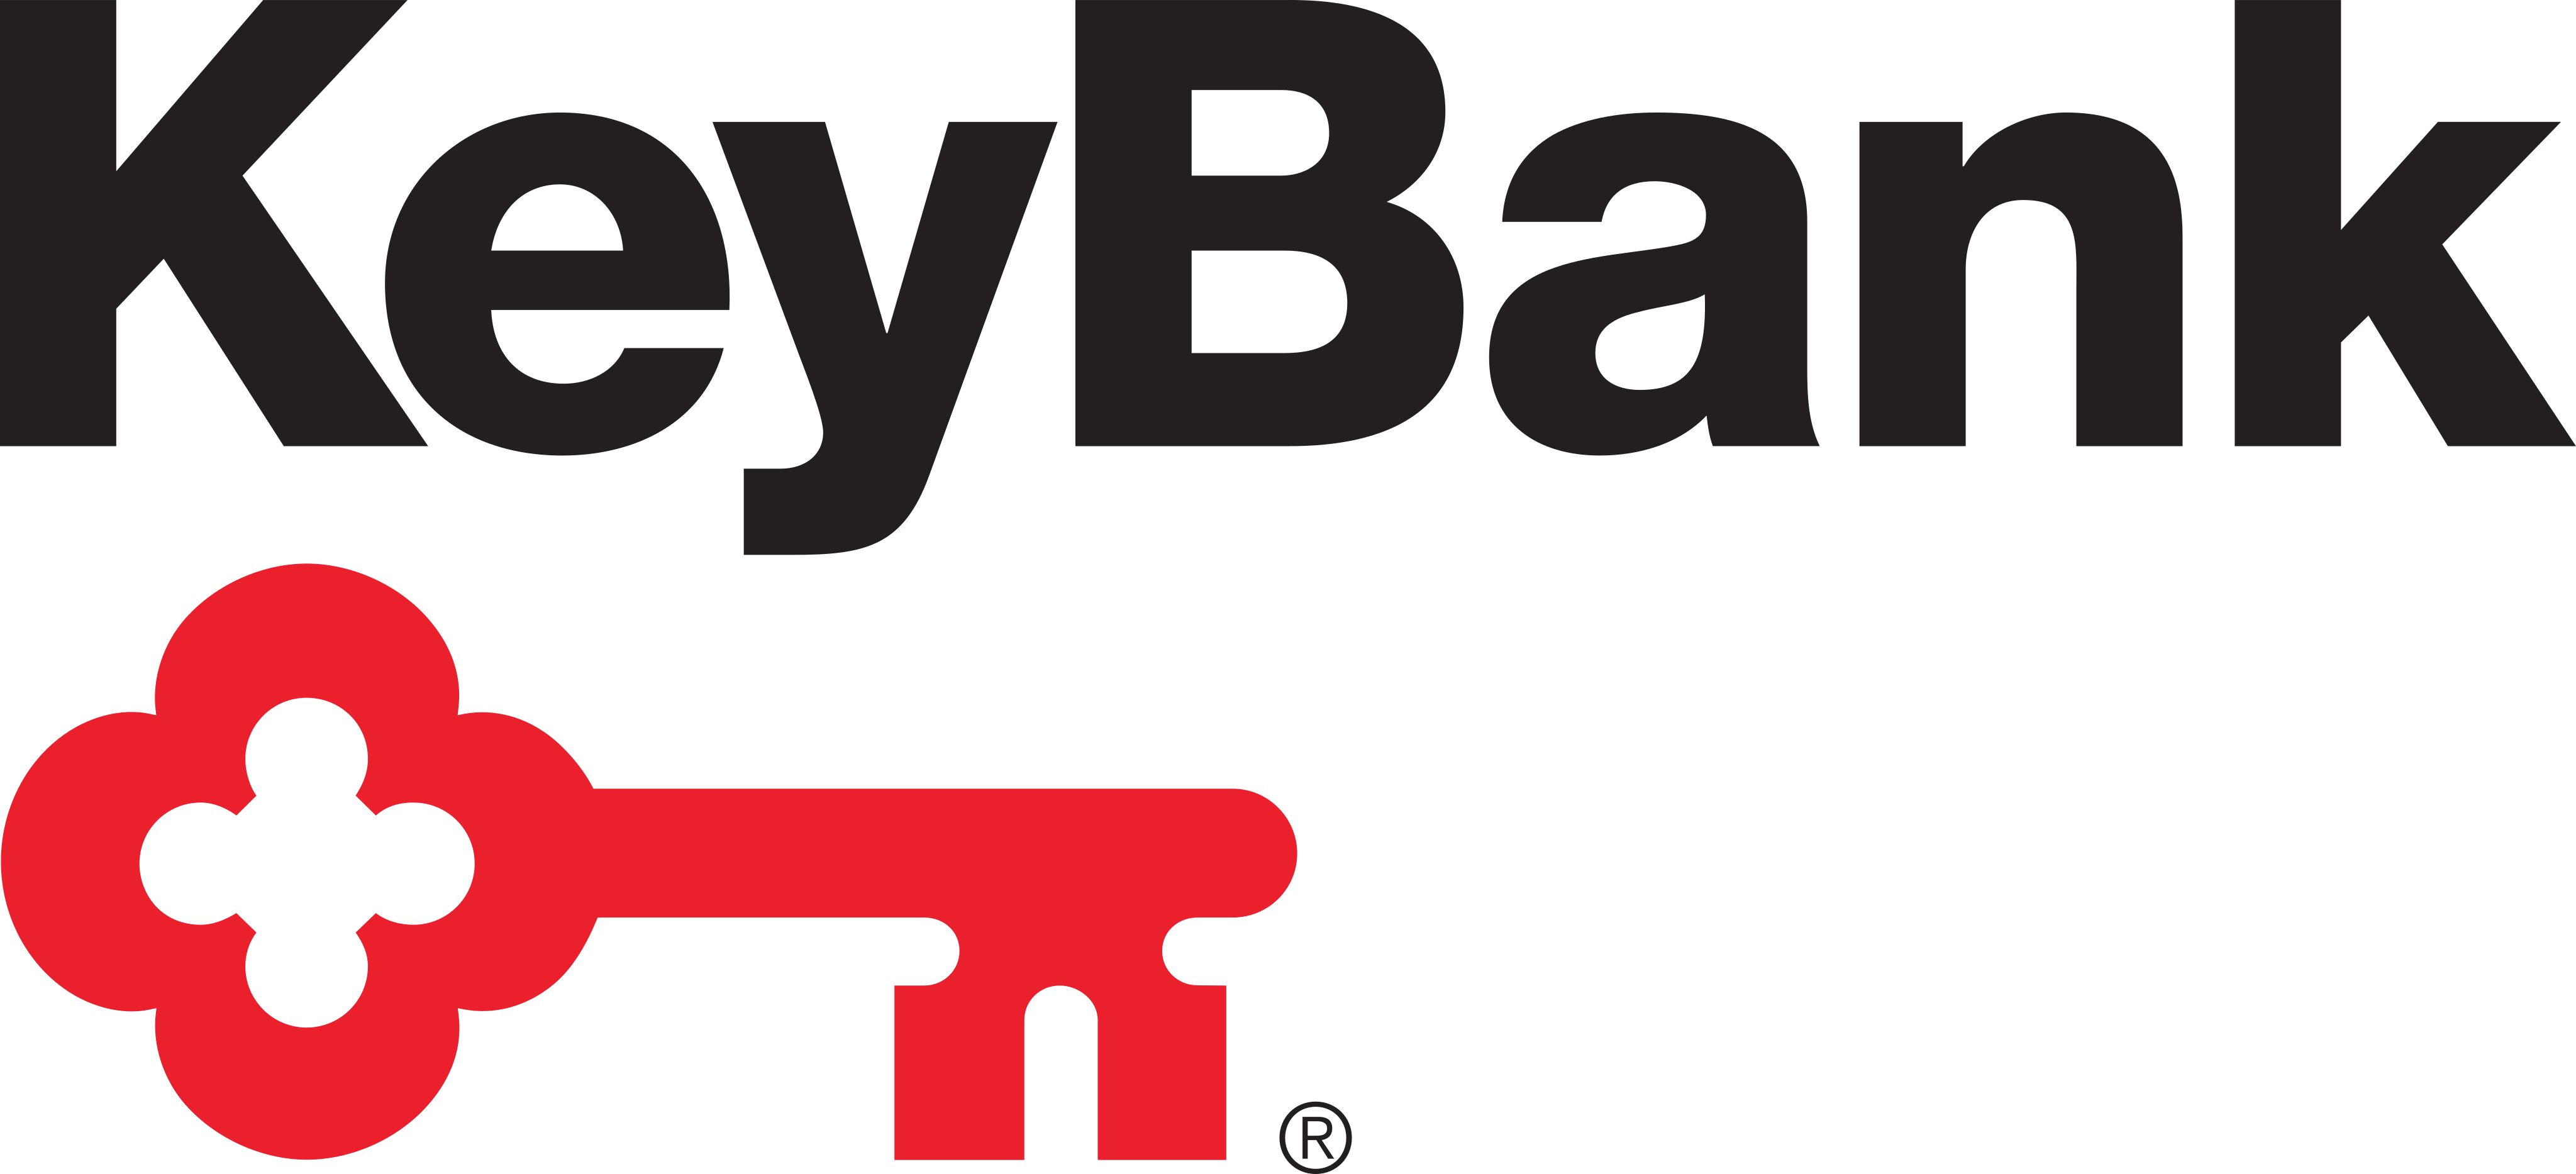 KeyBank Logo.